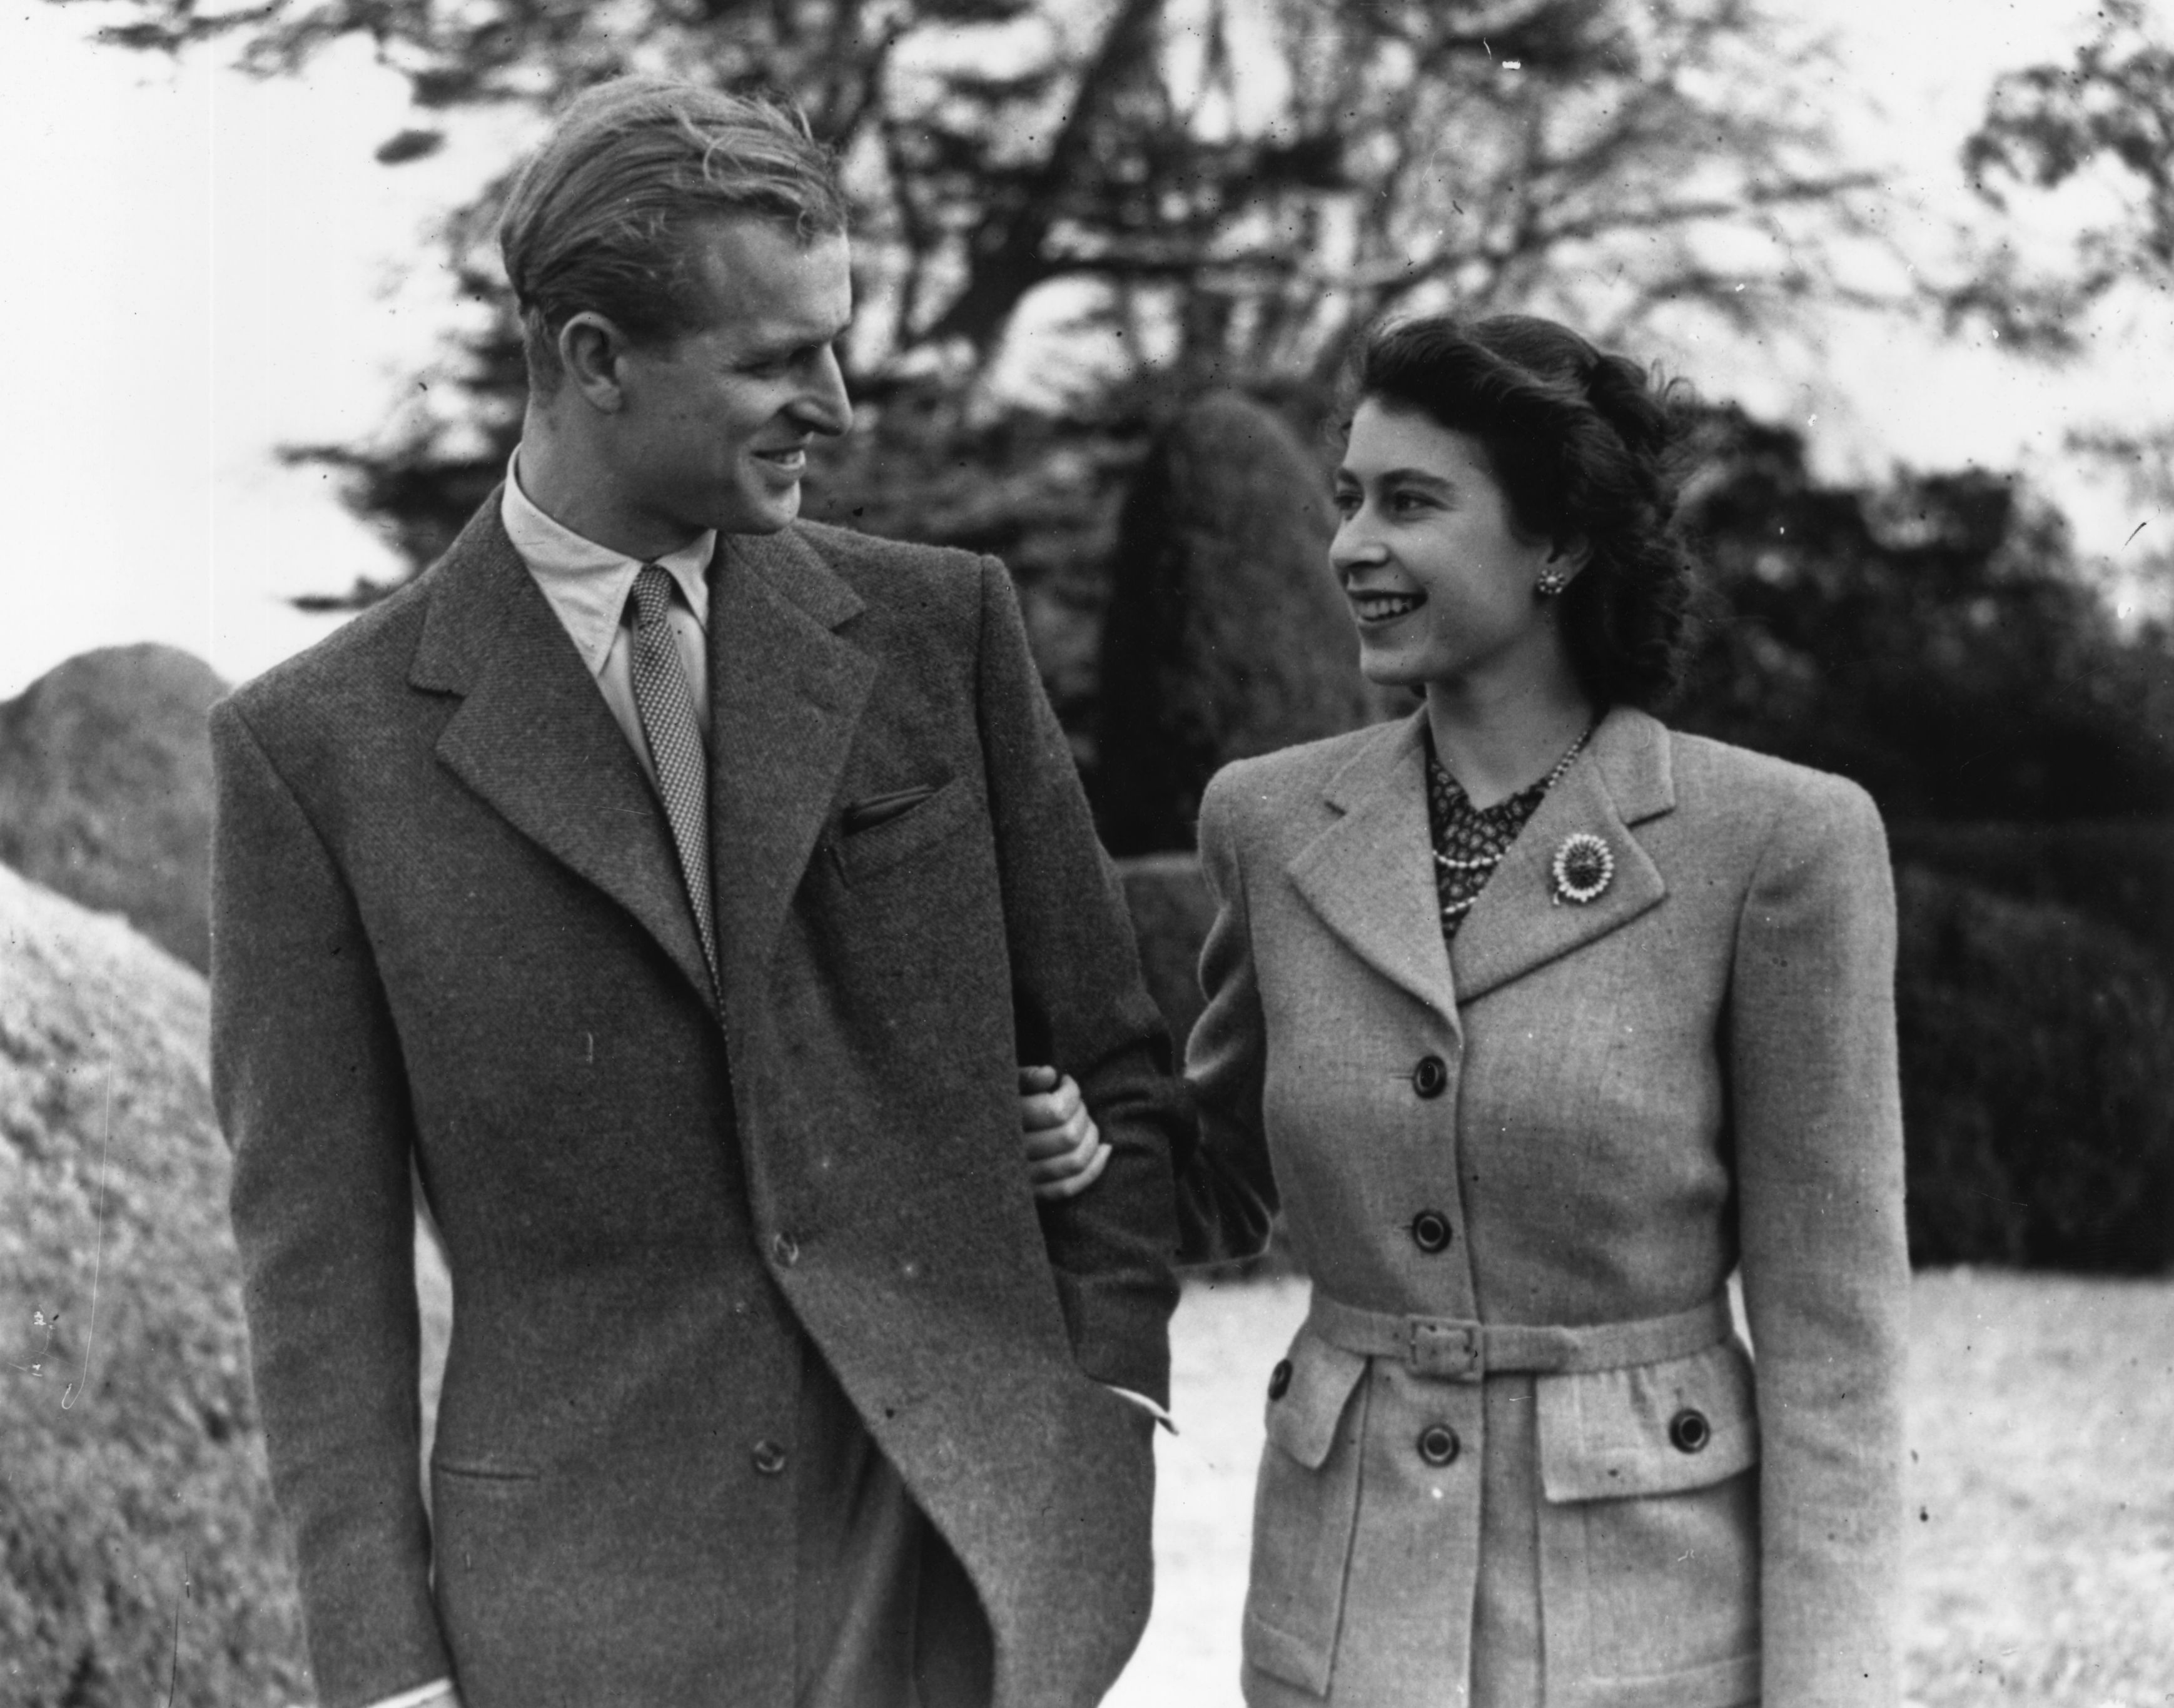 Princess Elizabeth and Philip Mountbatten, Duke of Edinburgh, walk during their honeymoon at Broadlands, Romsey, Hampshire, Nov. 24, 1947. (Topical Press Agency/Getty Images)